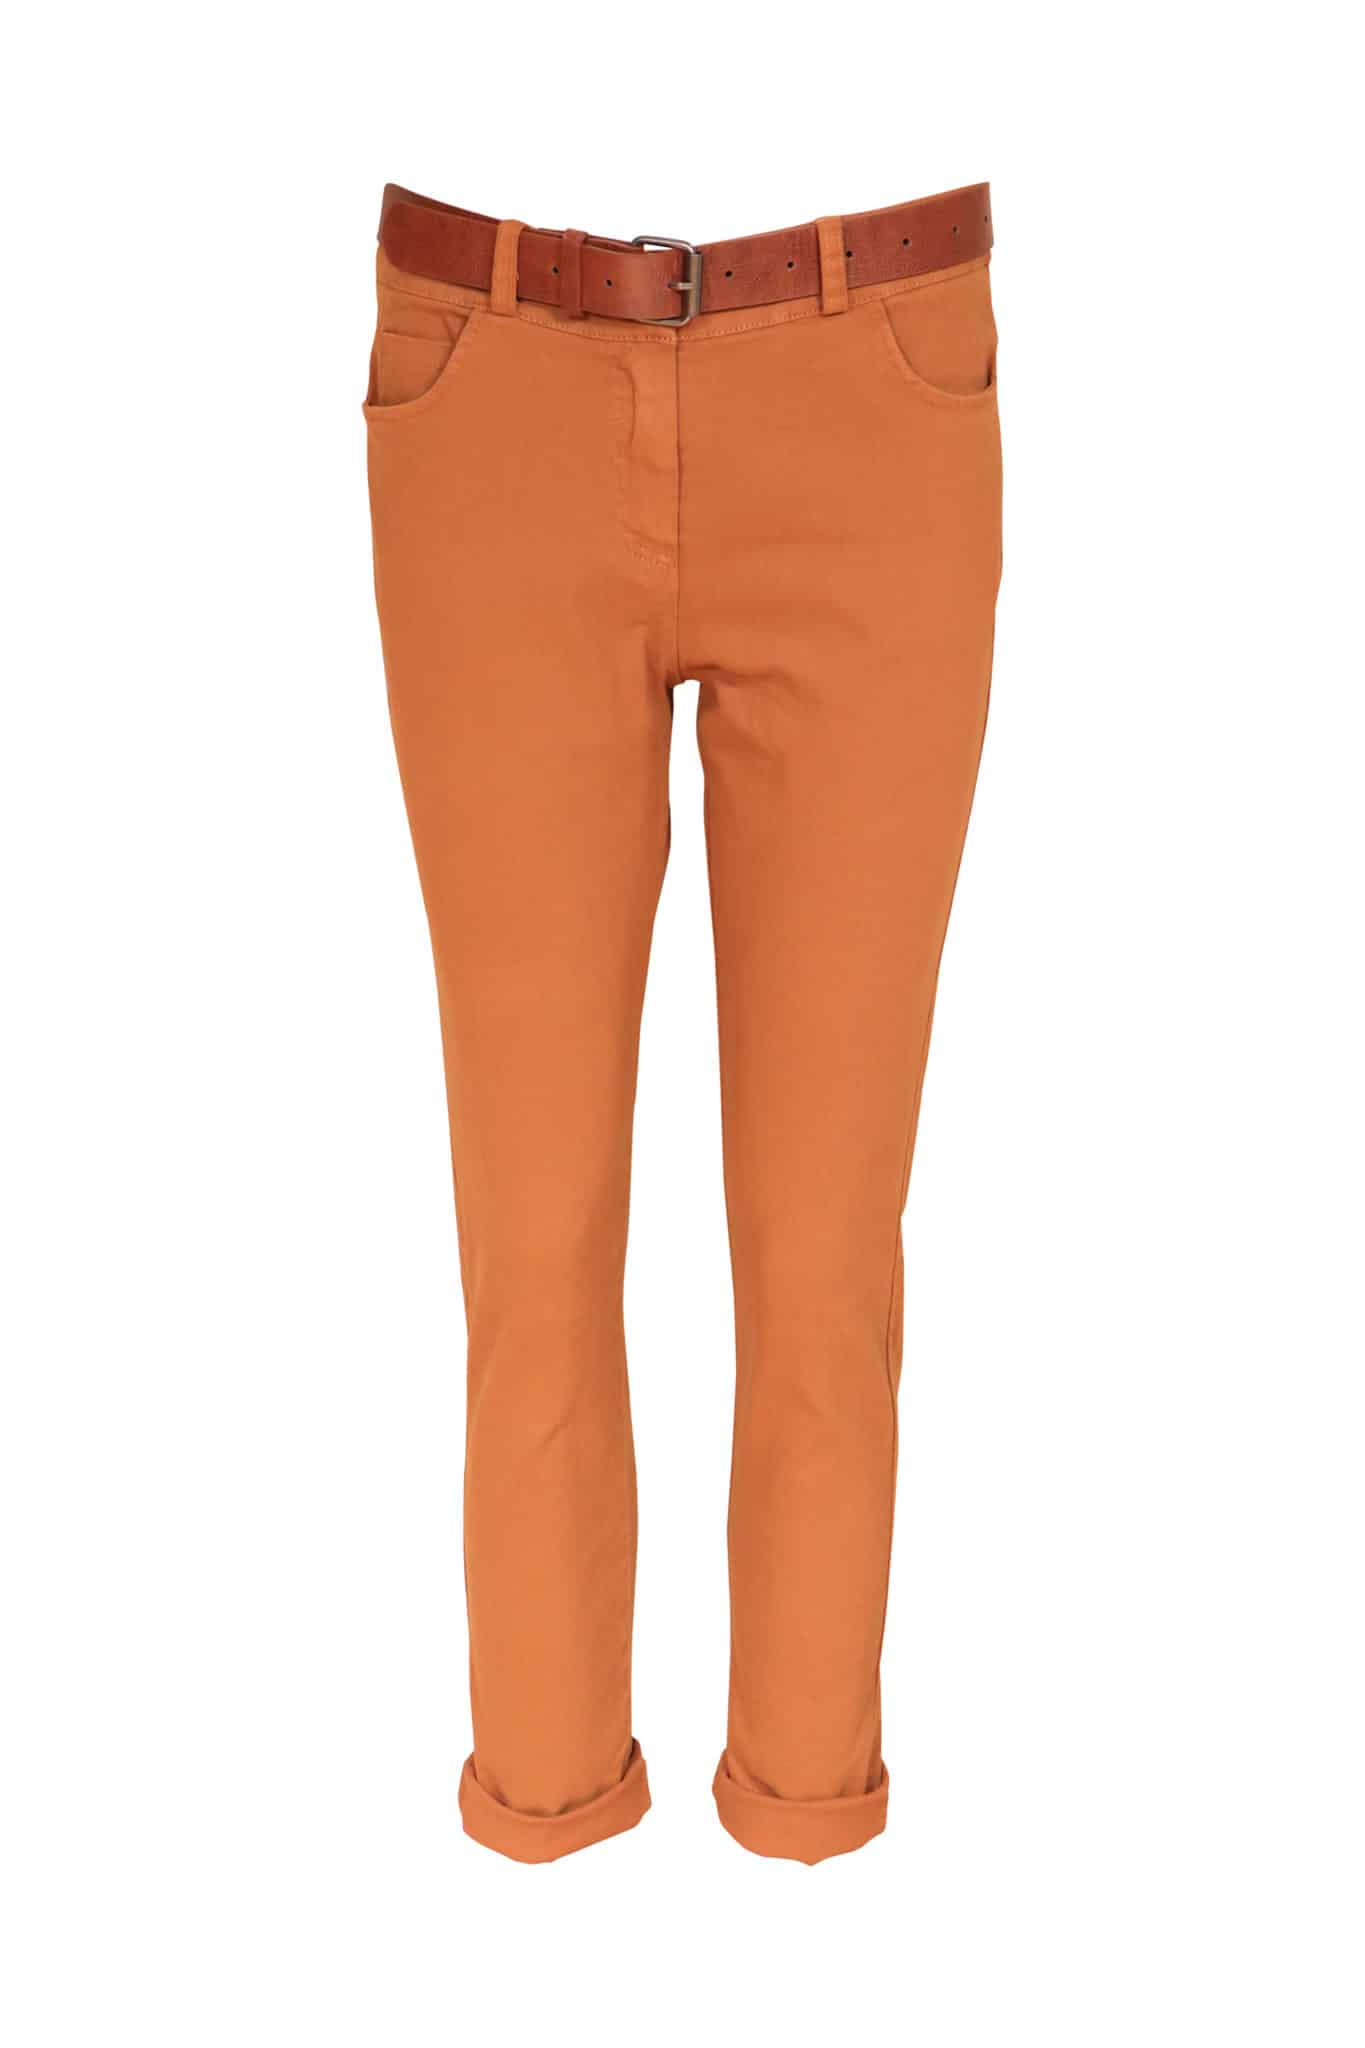 pantalon slim orange et ceinture marron en cuir